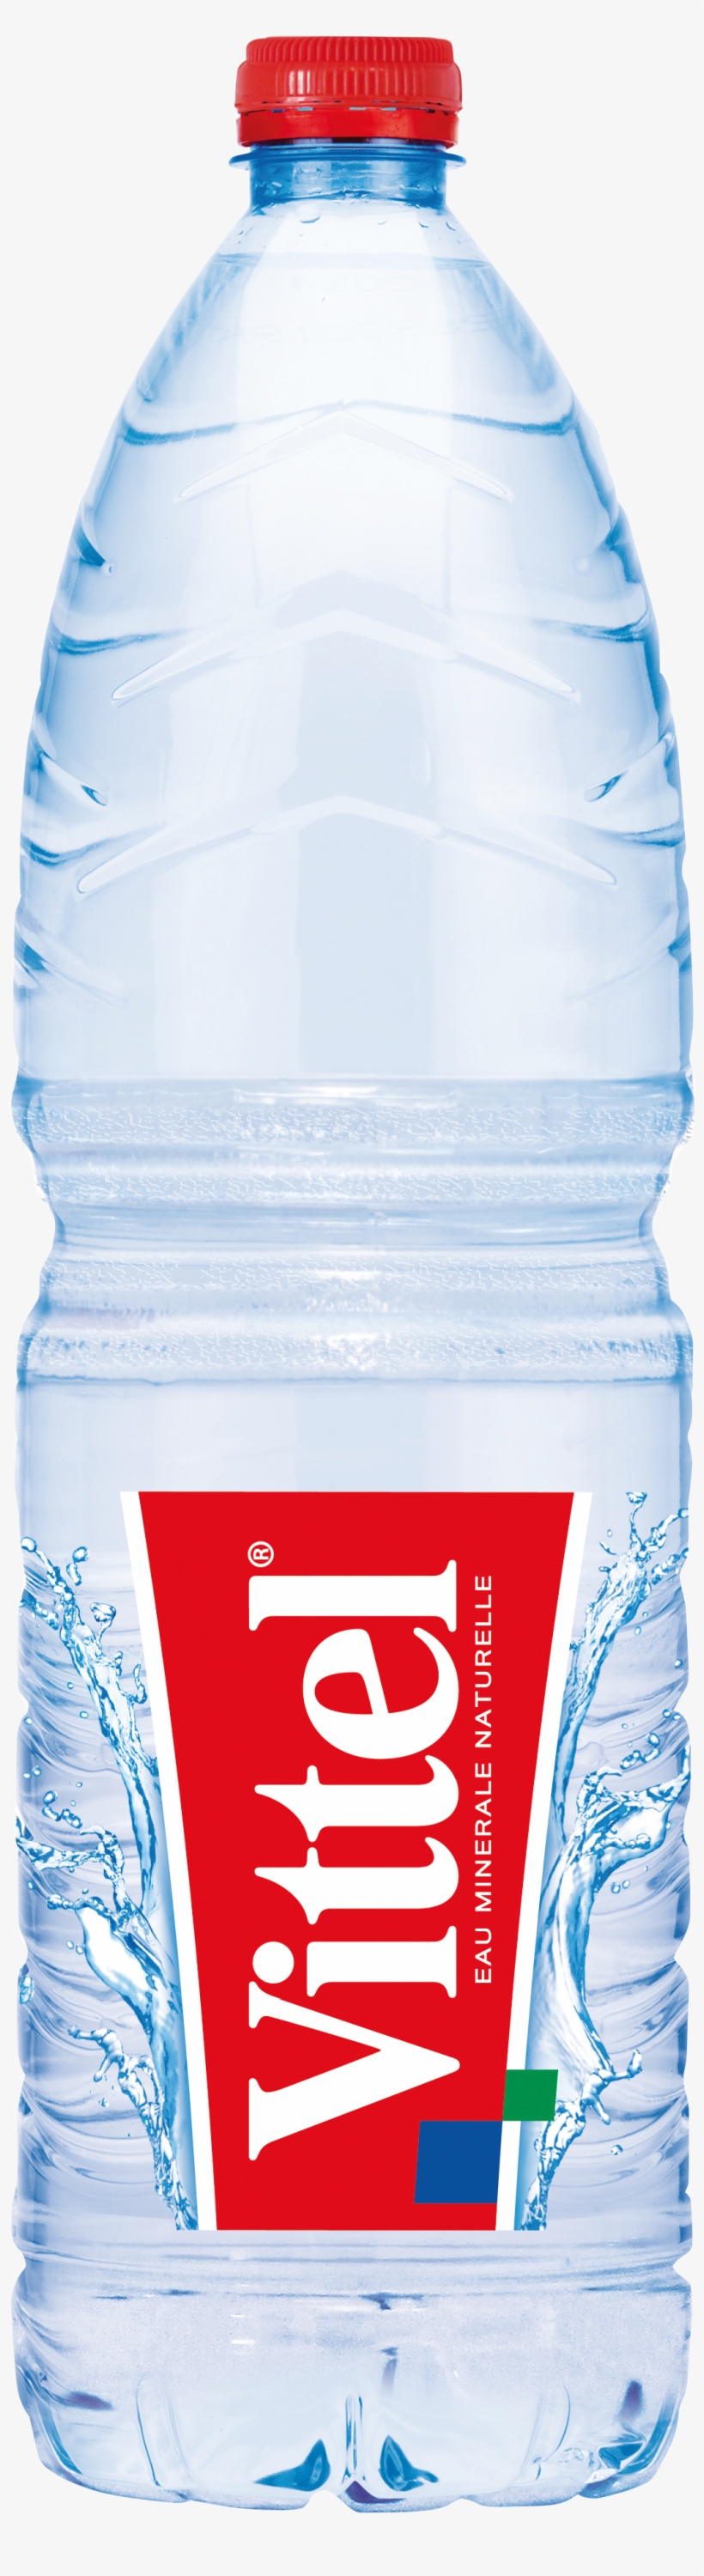 Nestle Water Bottle Png Download - Vittel Water, transparent png #2606046